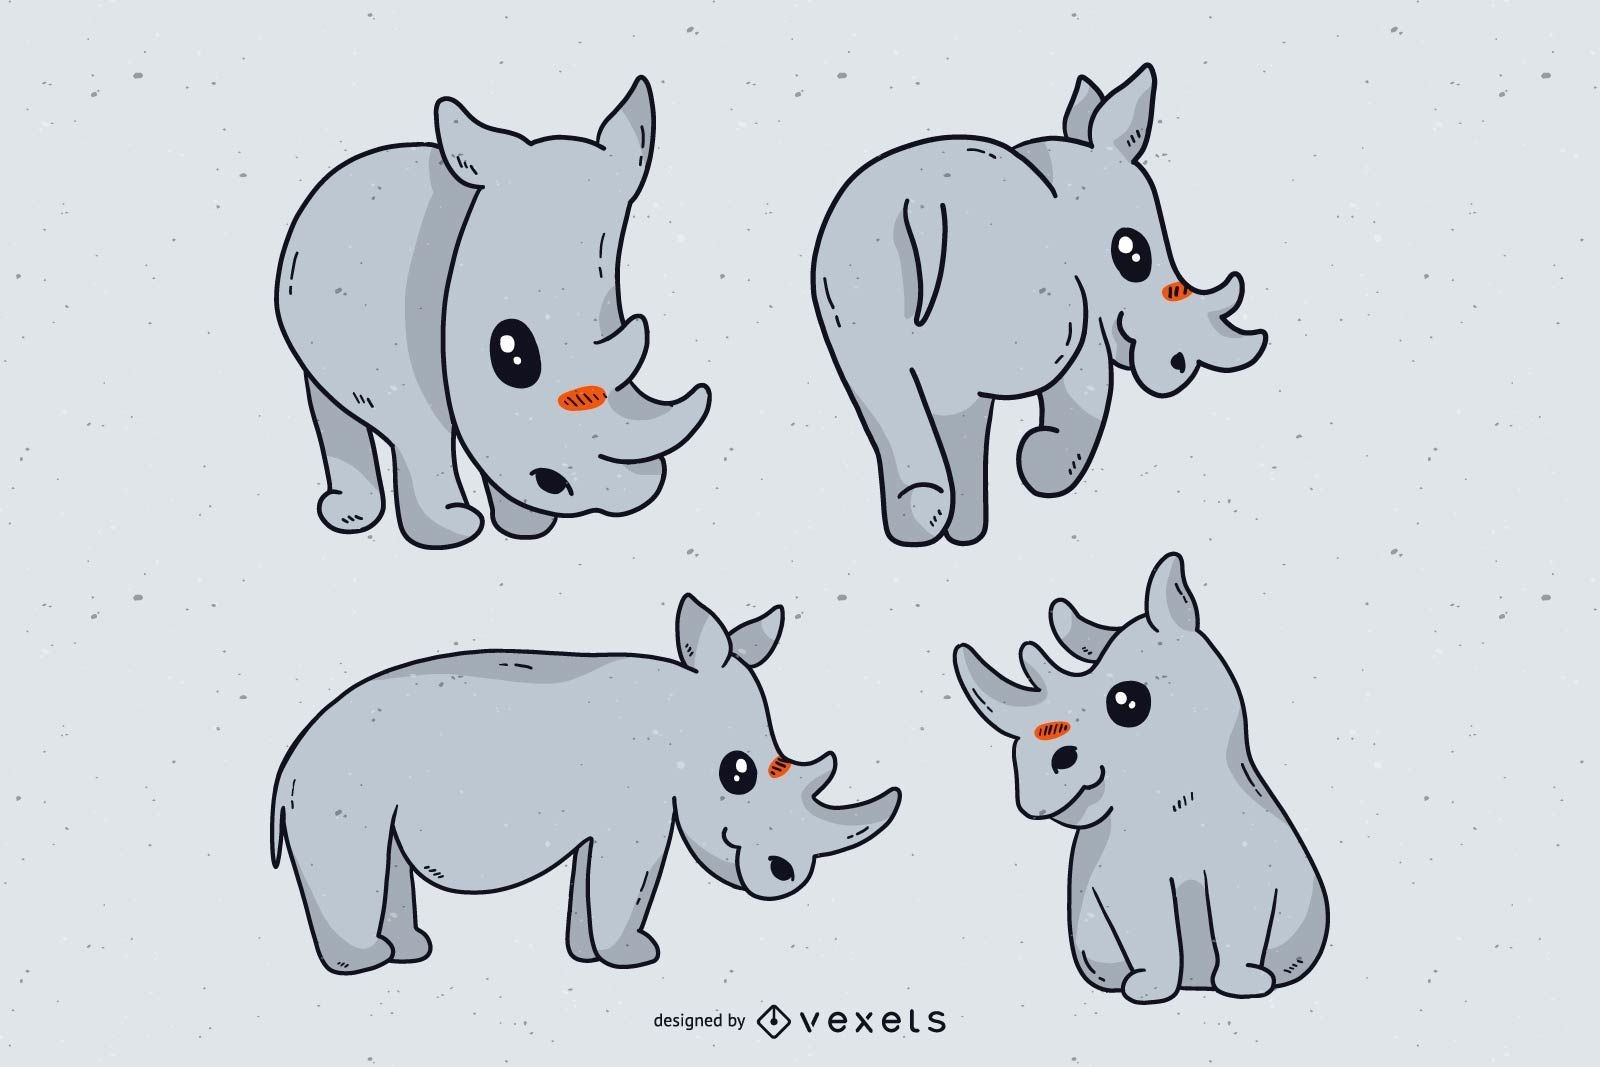 rhino cartoon images